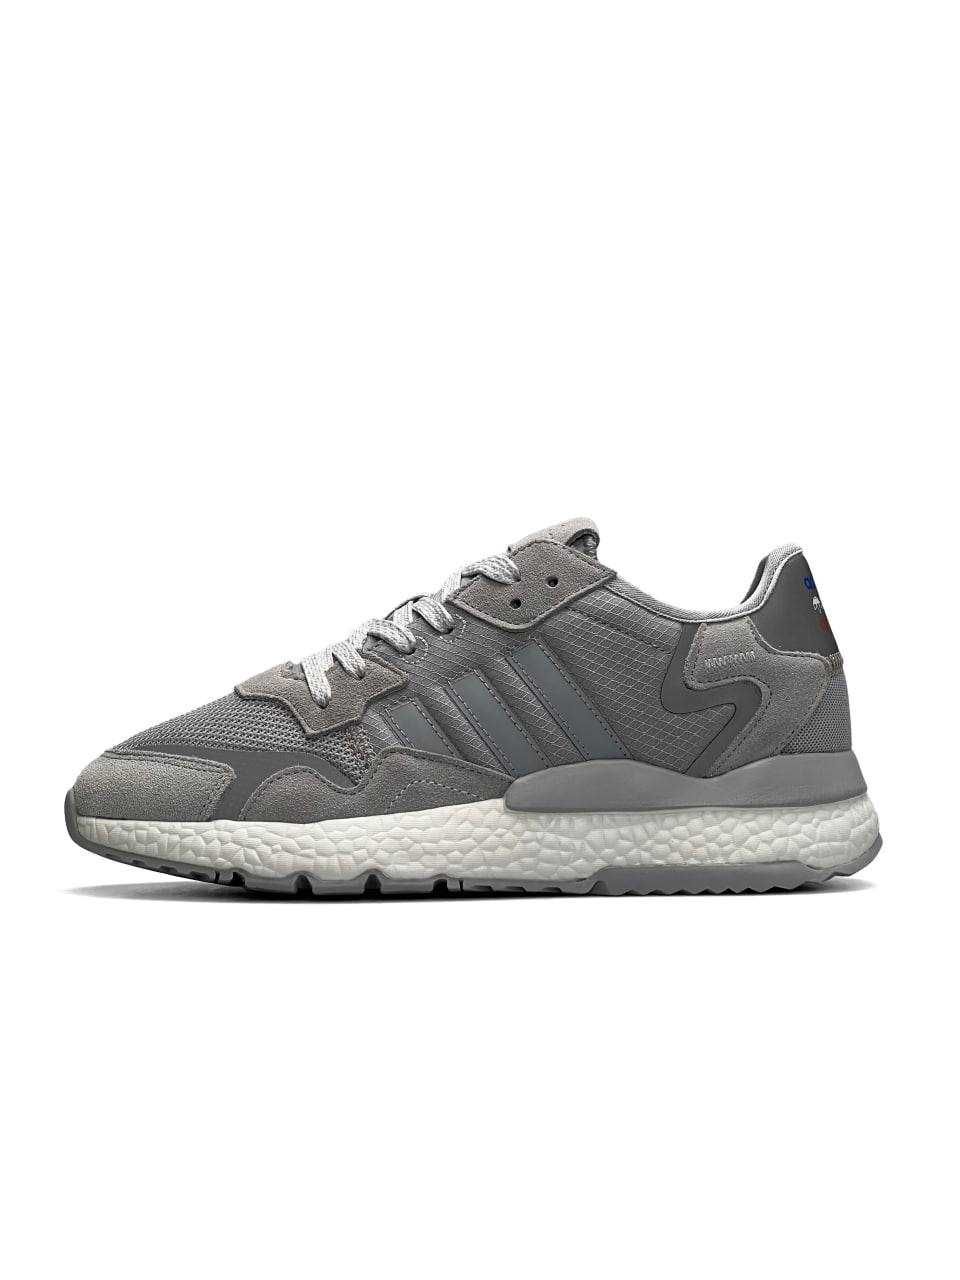 Adidas Nite Jogger Gray кроссовки мужские adidas gray (адидас)